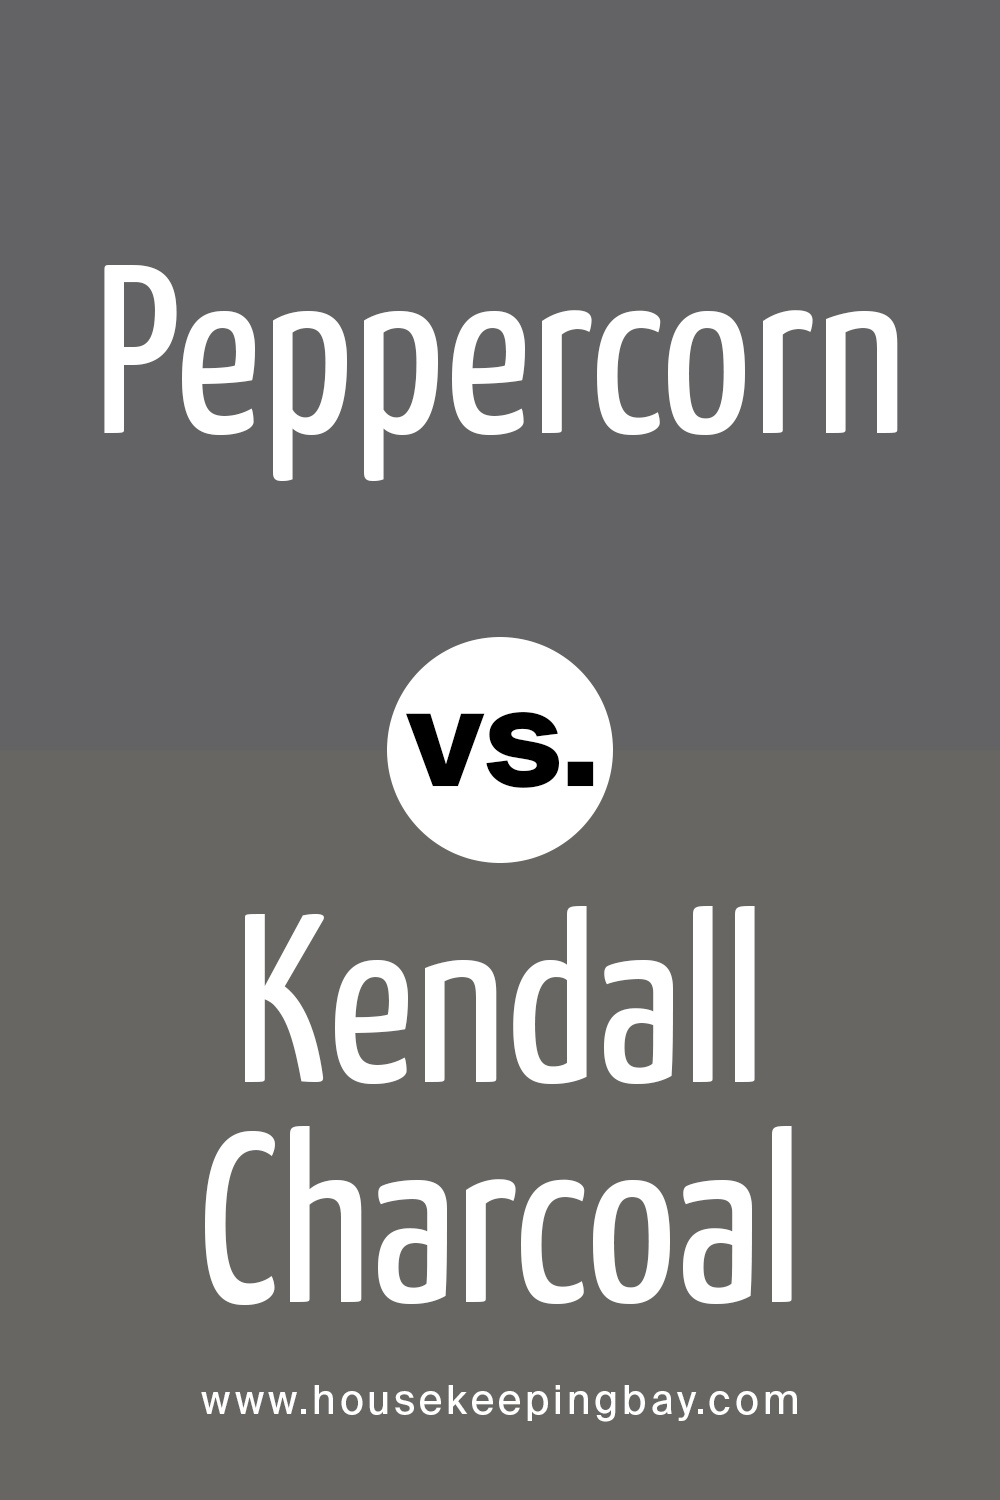 peppercorn vs kendall charcoal